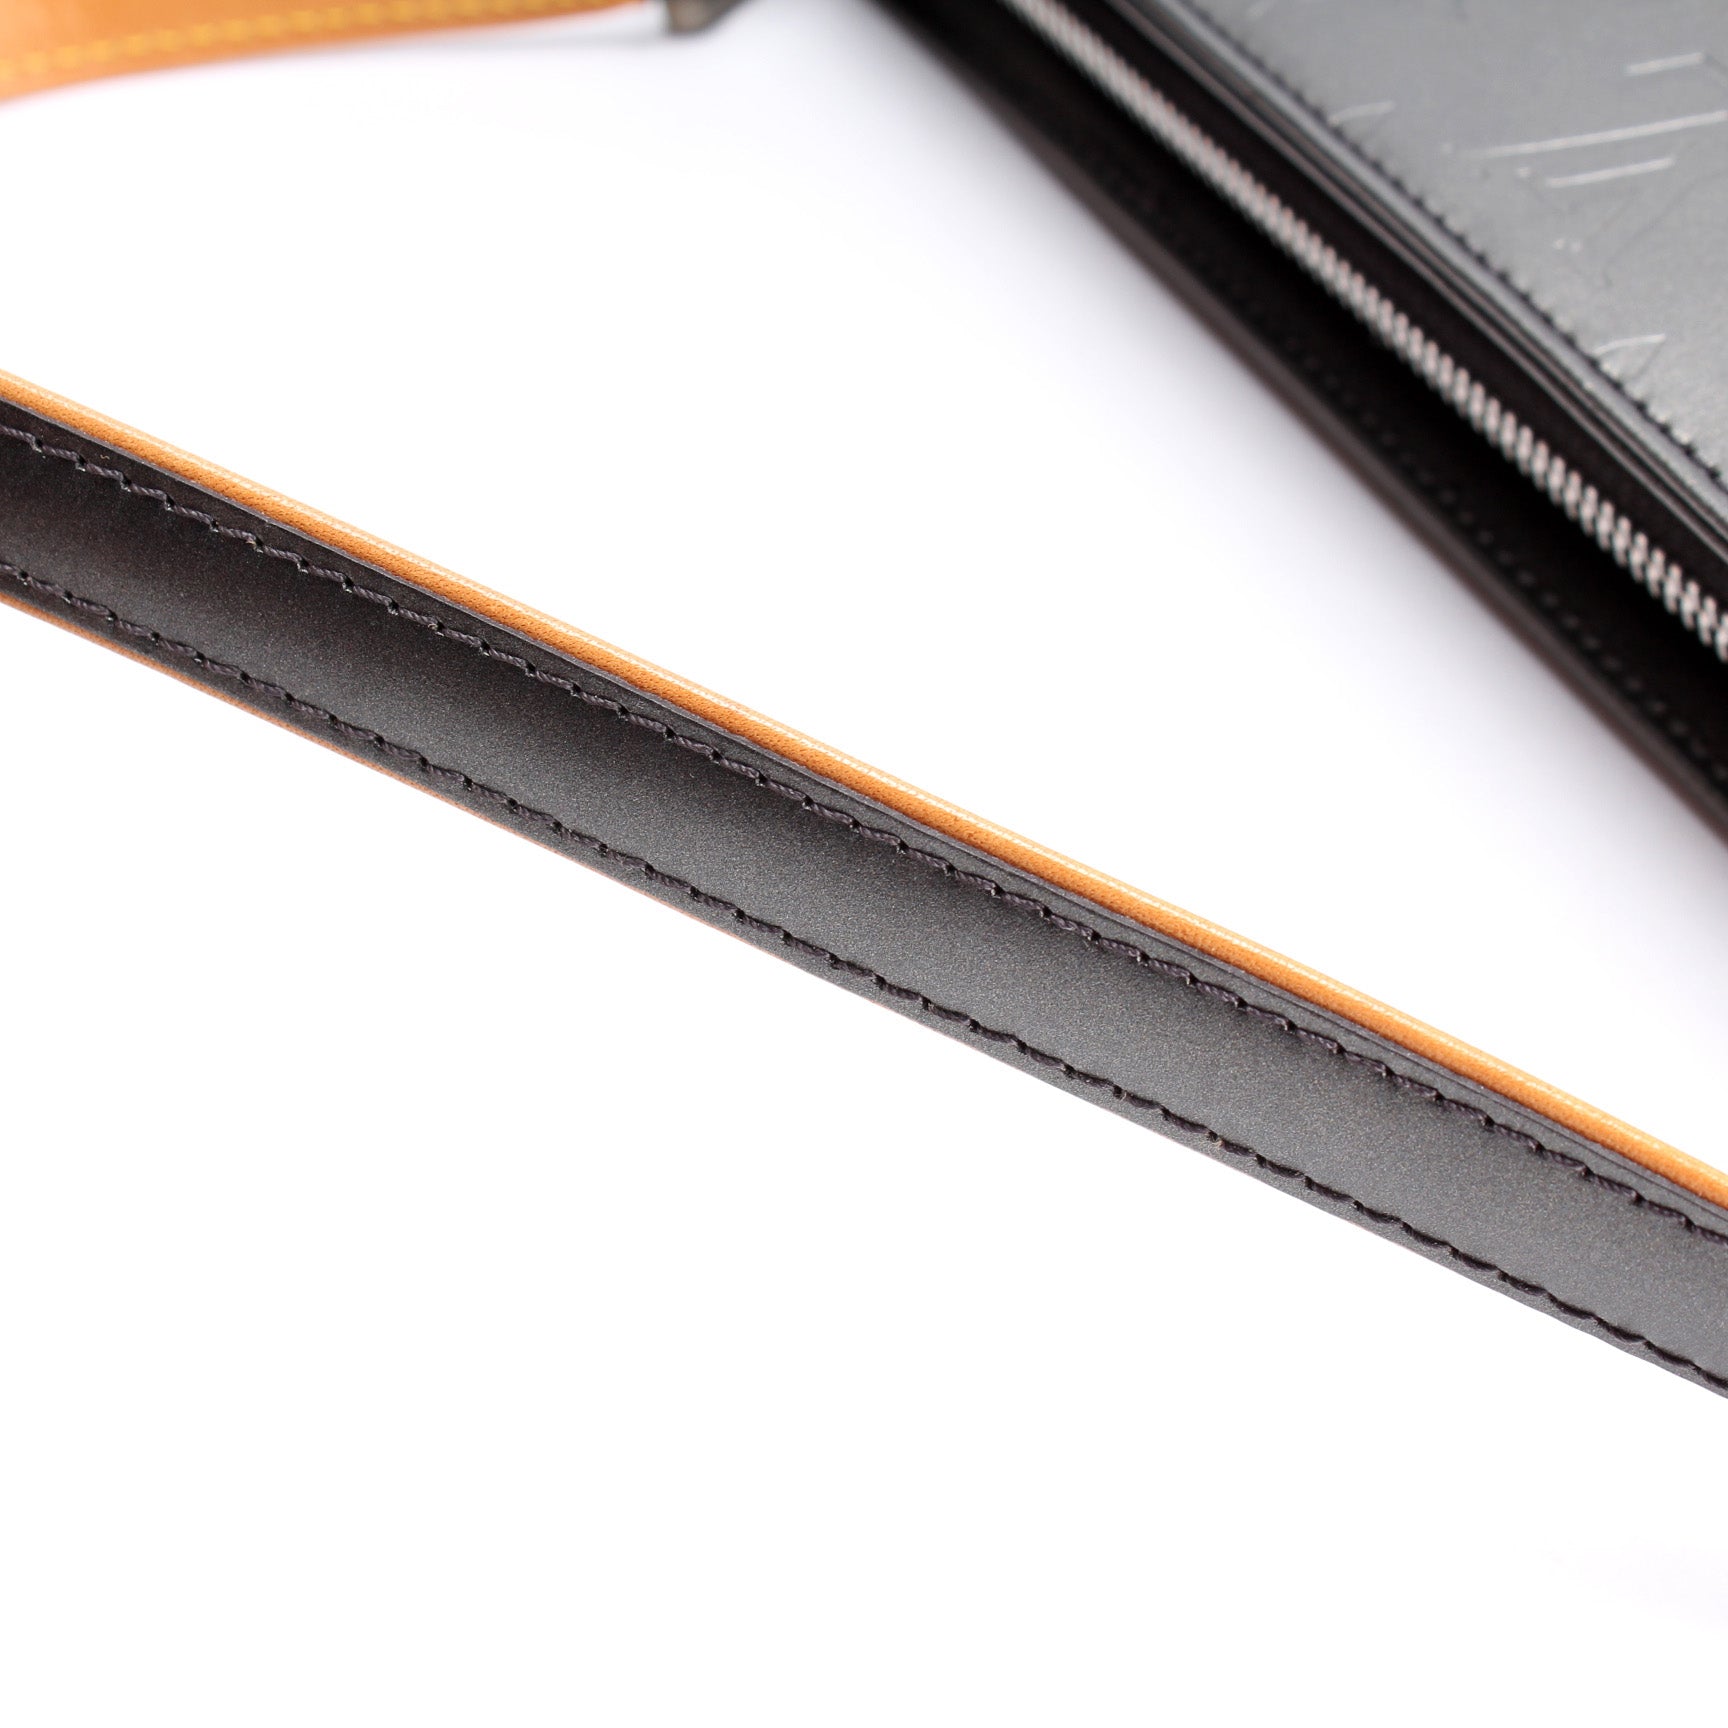 Fowler Monogram Matte Leather – Keeks Designer Handbags